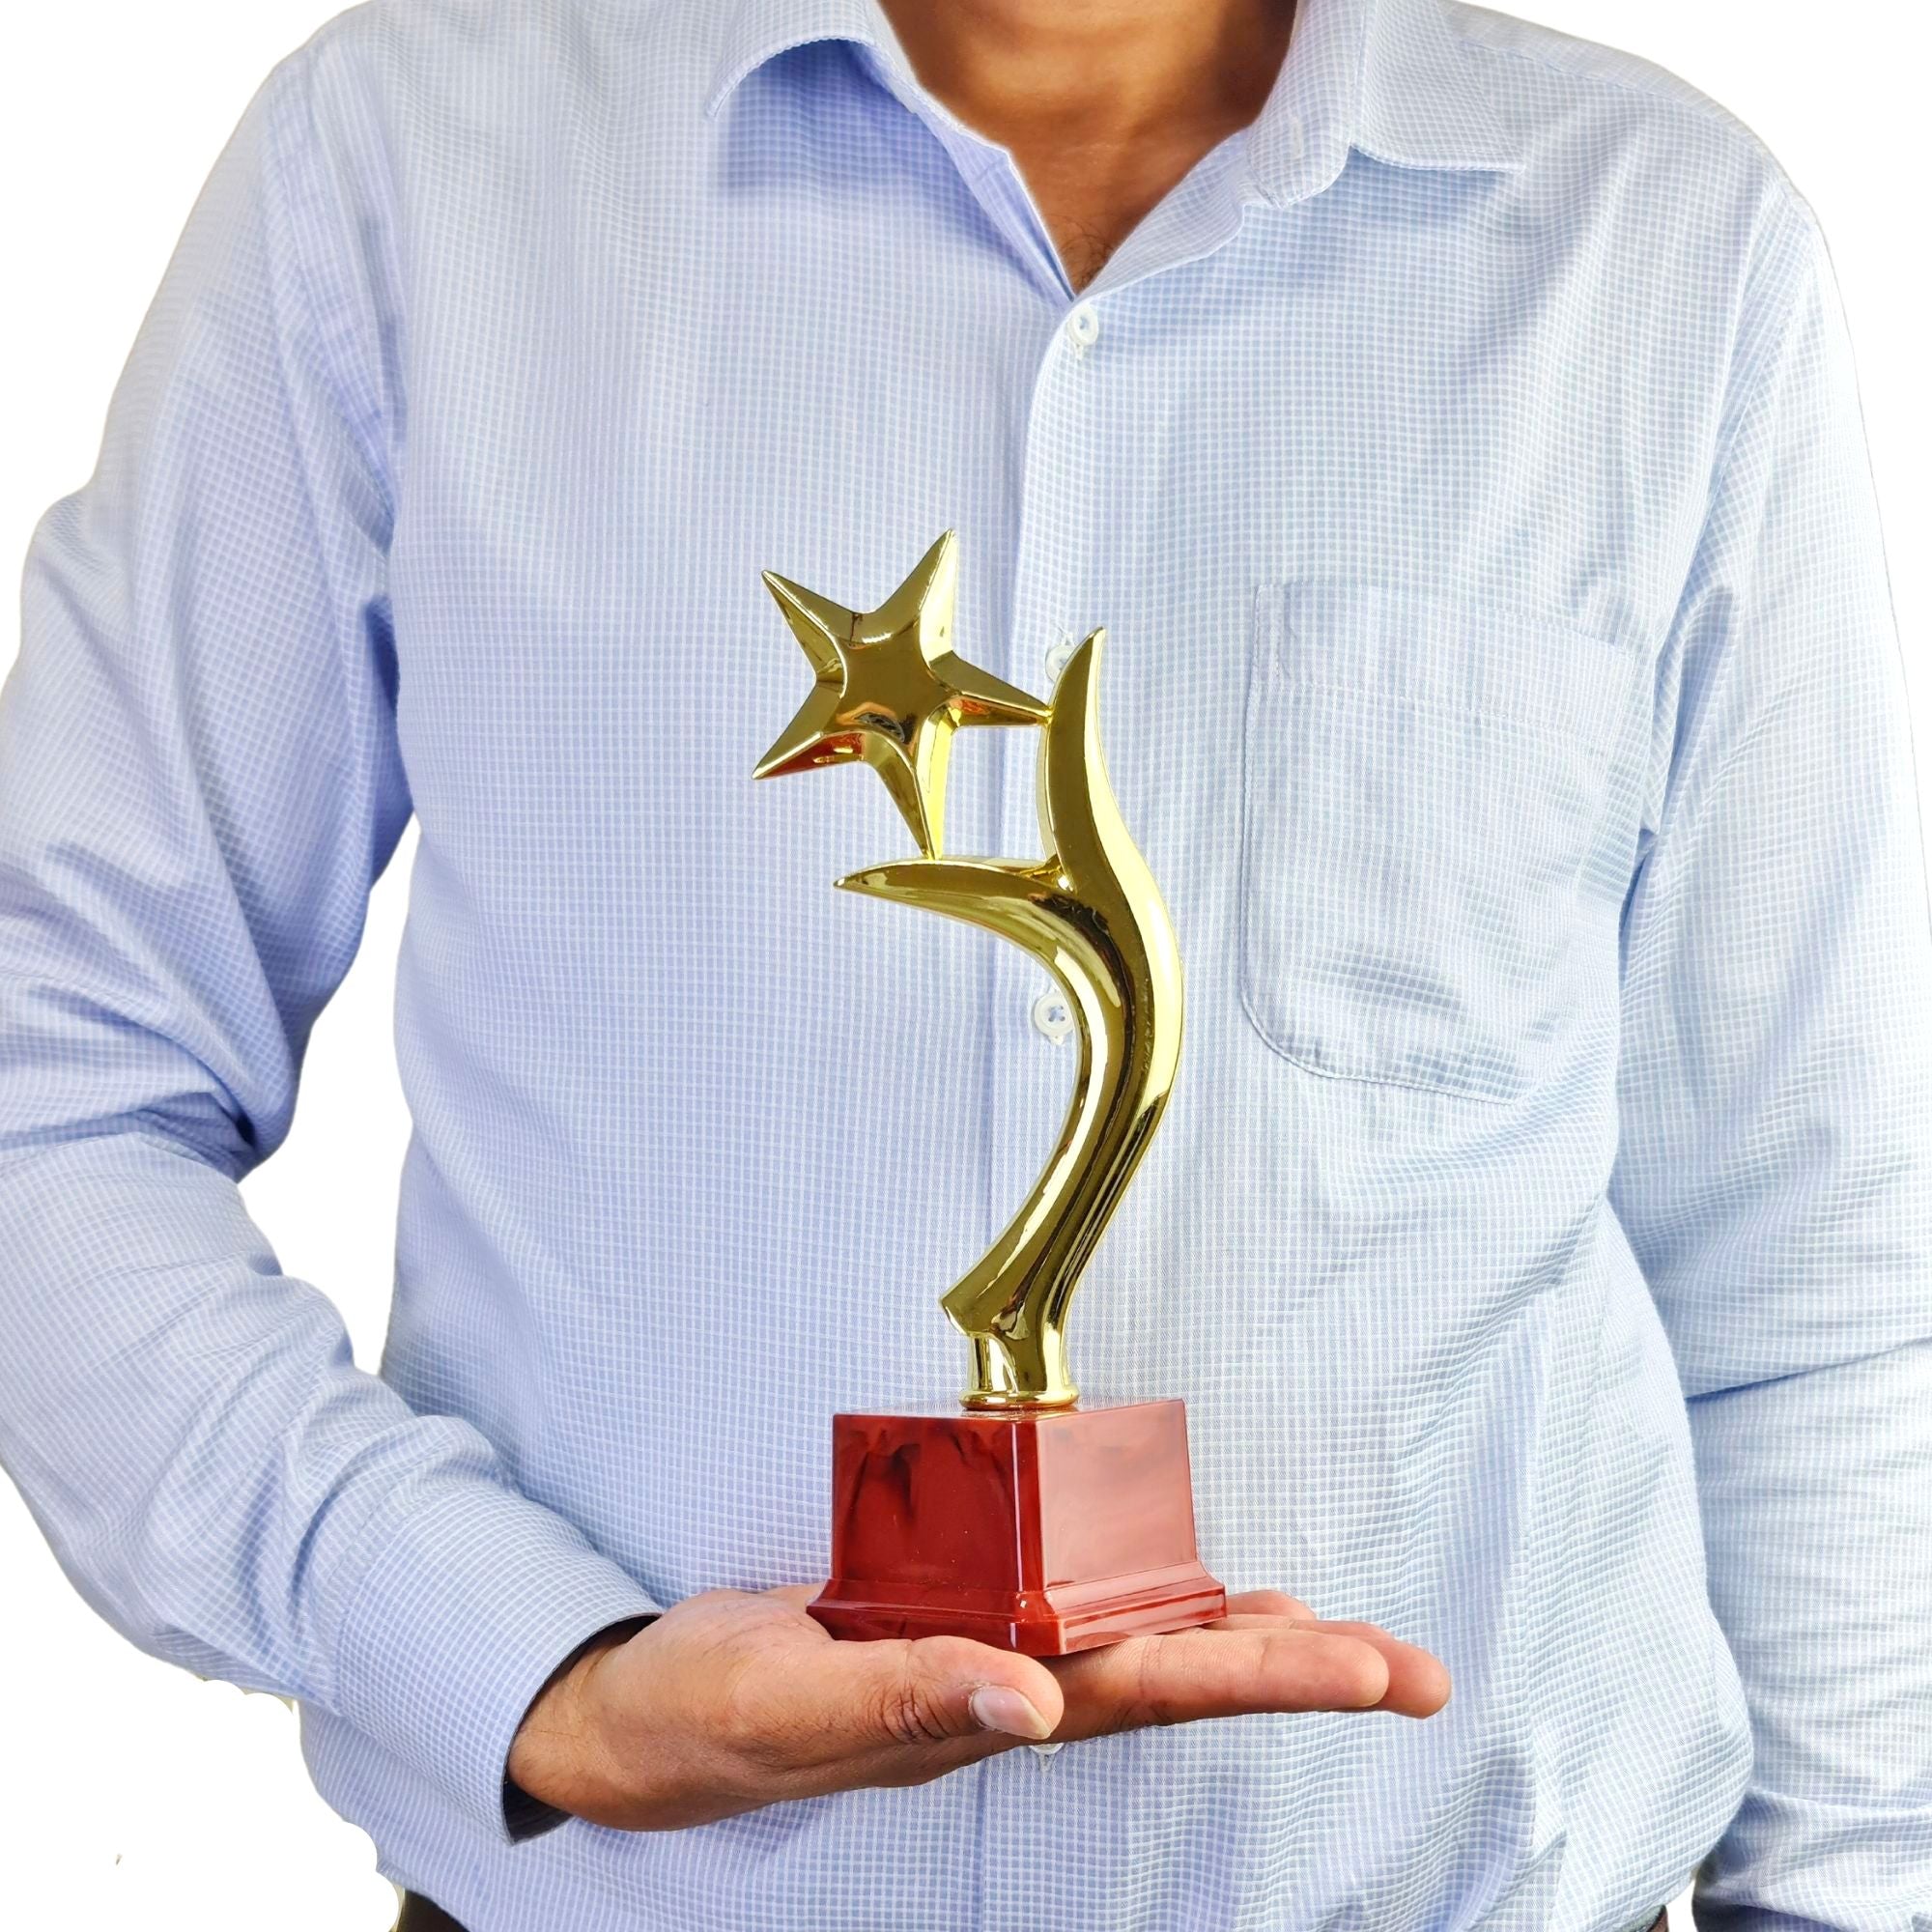 Plastic Golden Trophy Cup for Winner Kids - Star Shaped